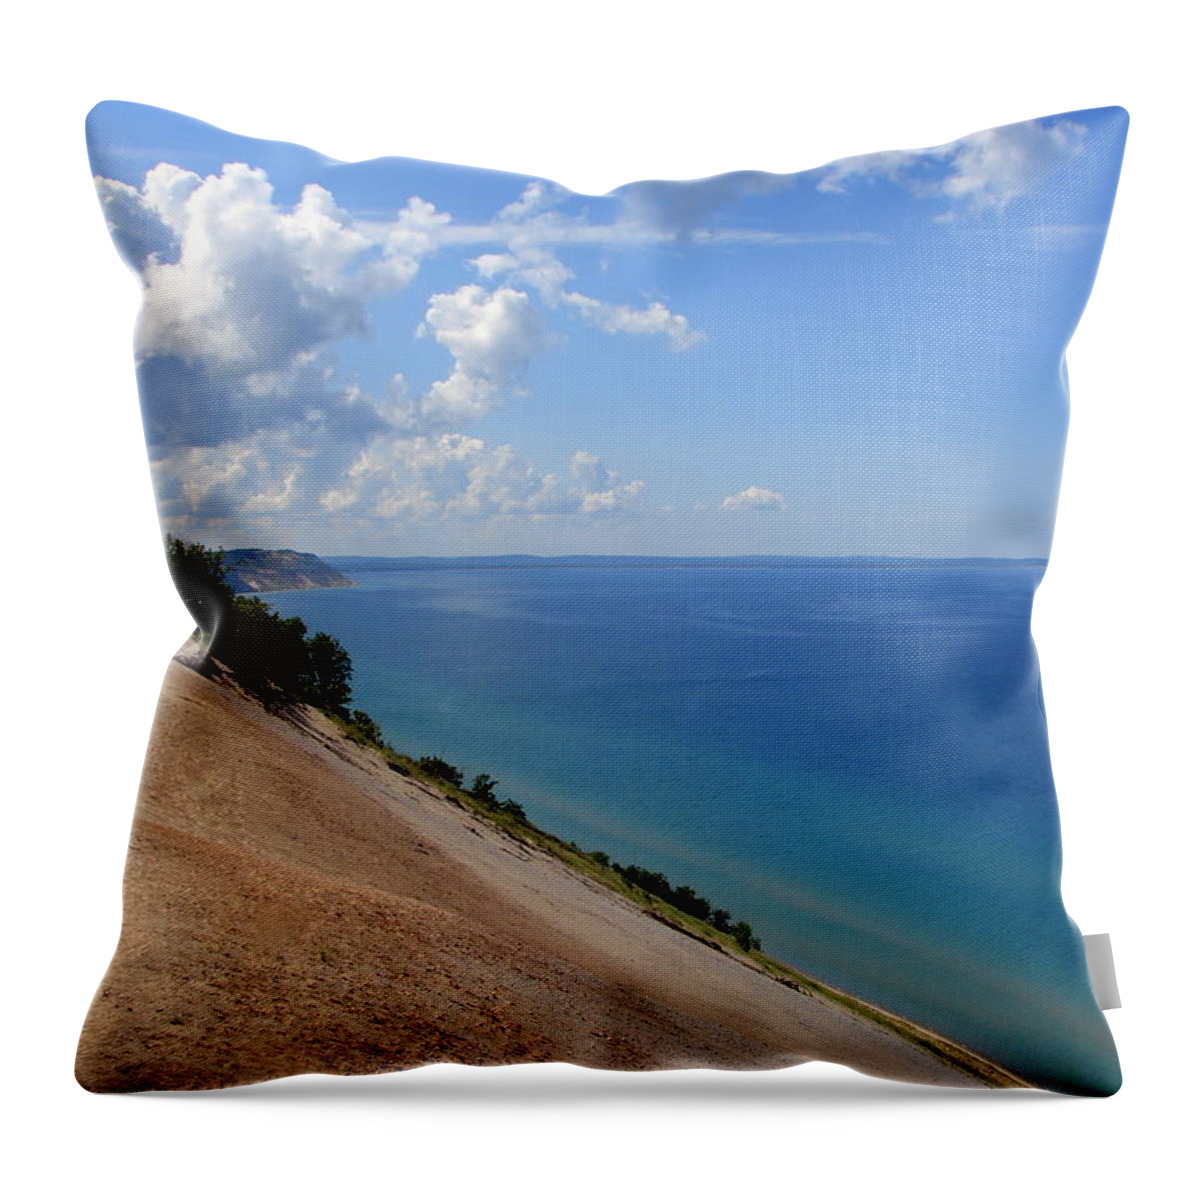 Sleeping Bear Dunes Throw Pillow featuring the photograph Sleeping Bear Dunes National Lakeshore Michigan by Michelle Calkins